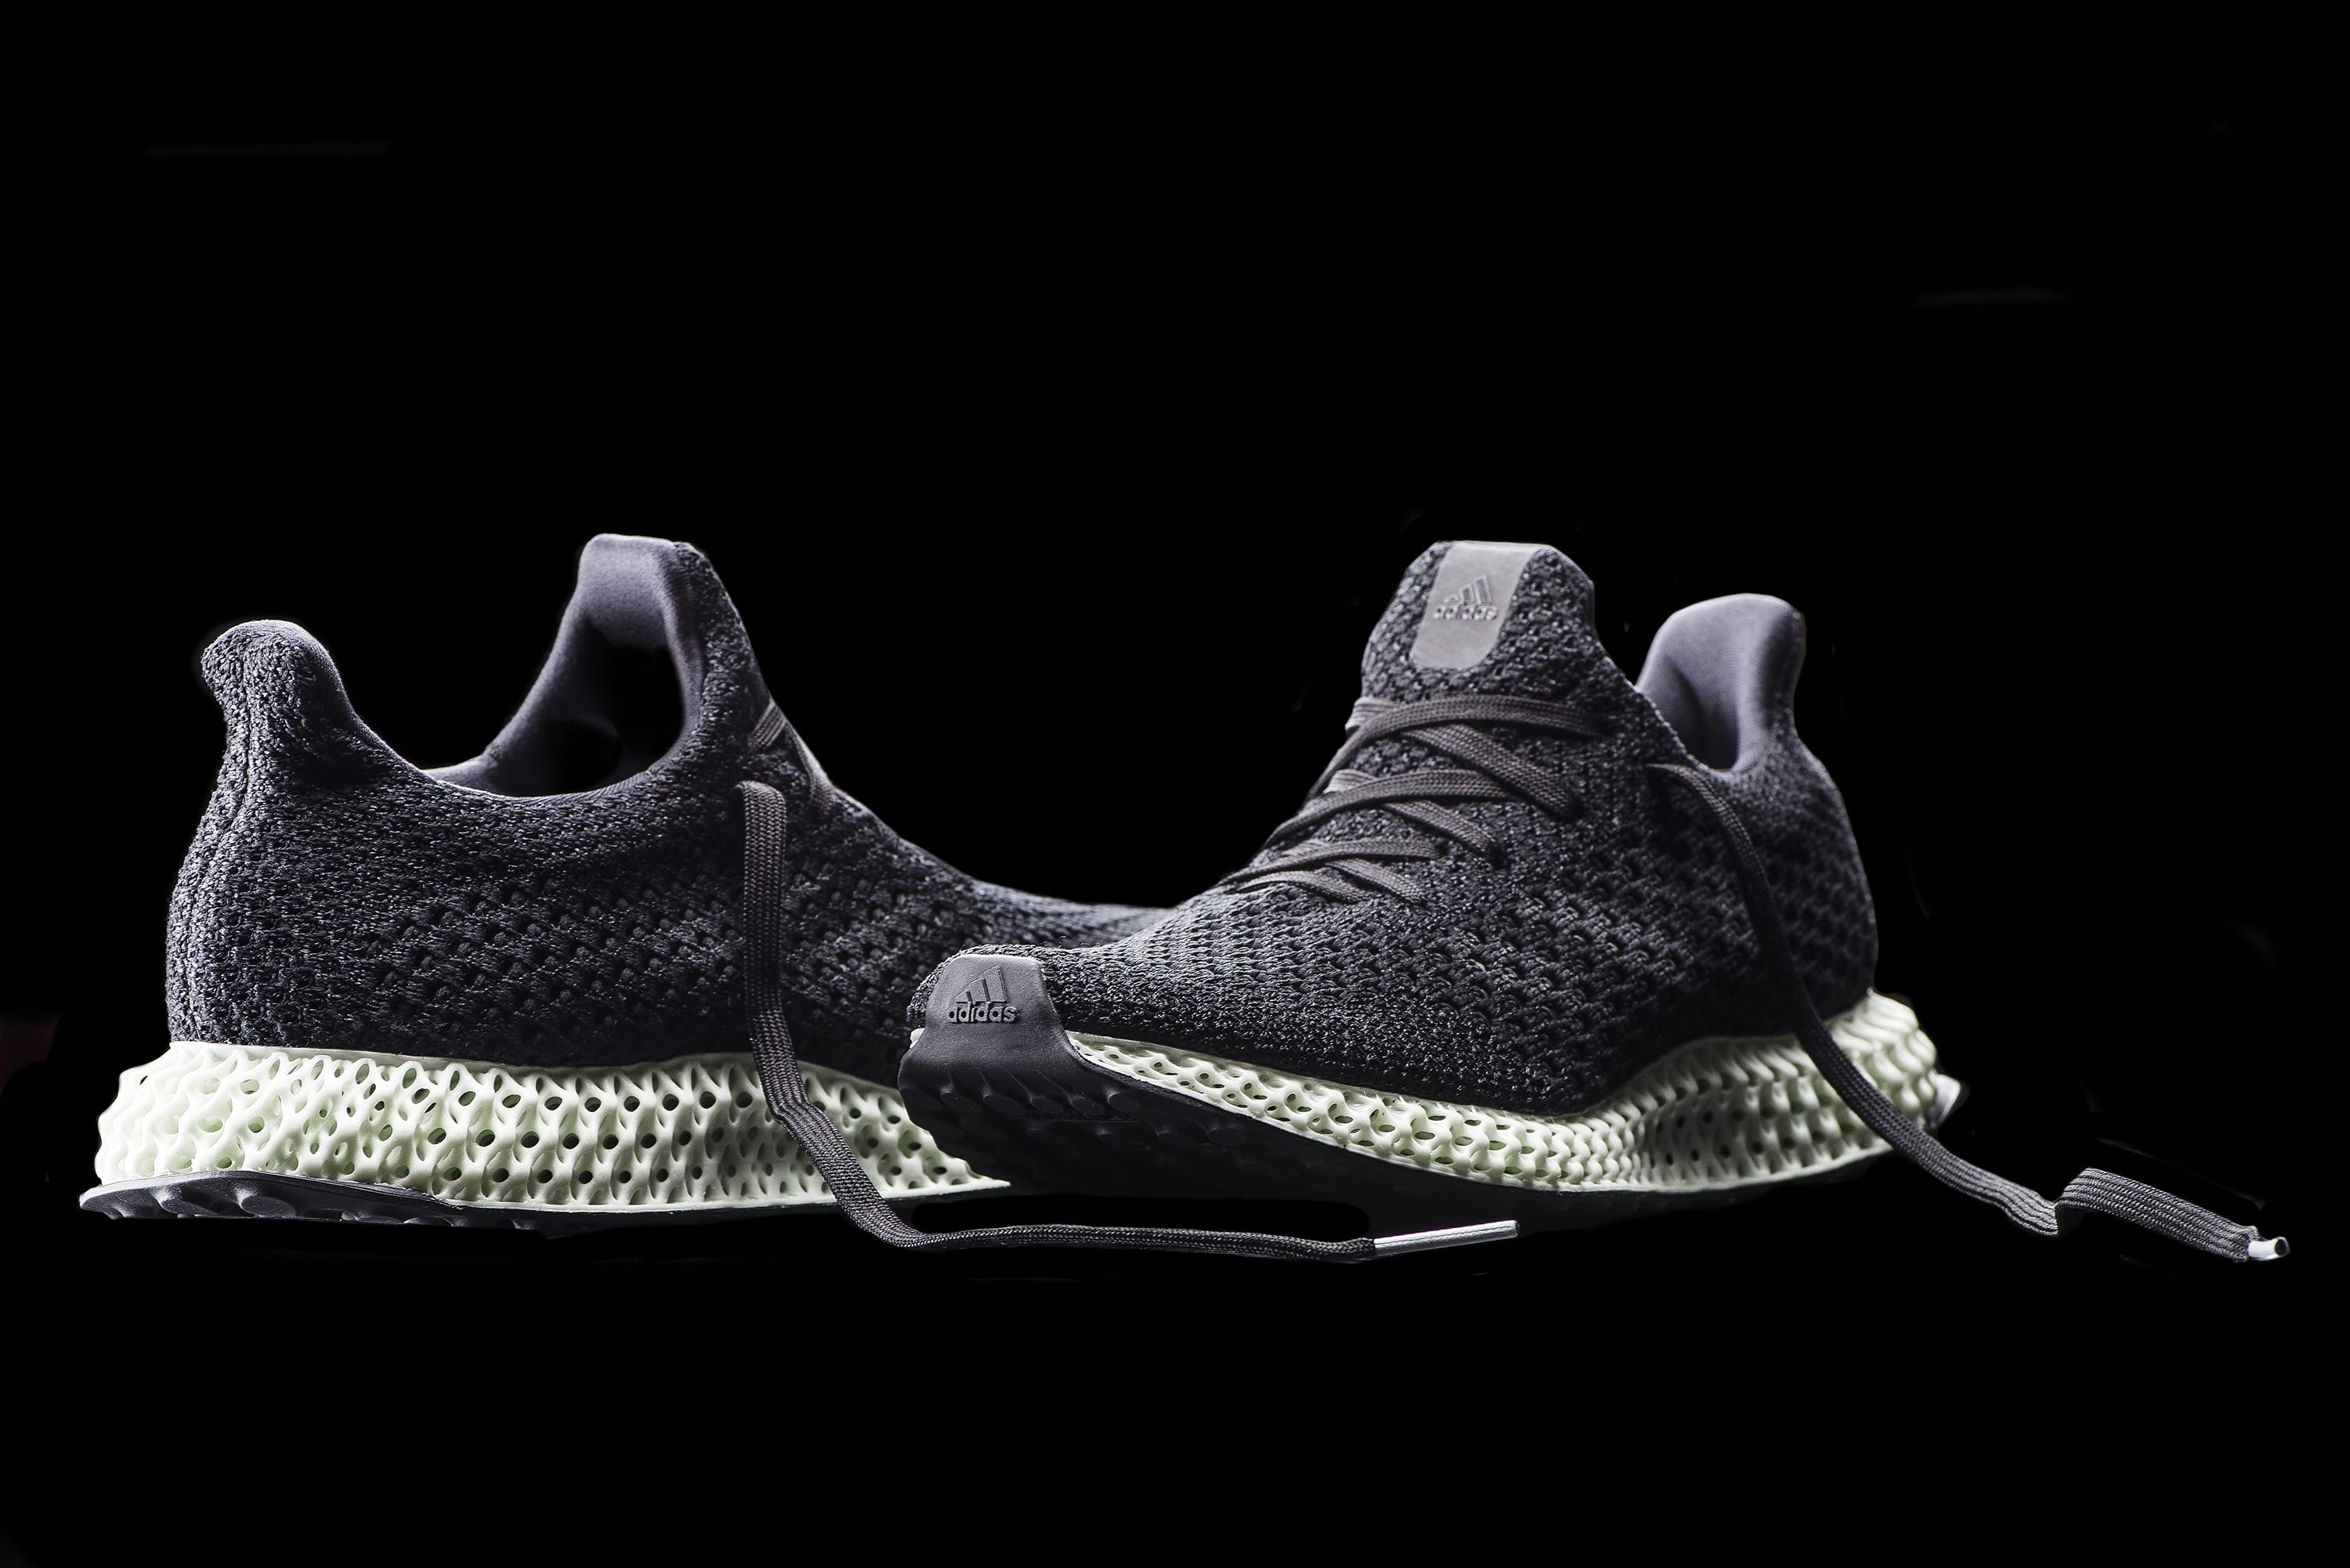 Adidas and Carbon Announce 3D Printed AlphaEDGE 4D LTD Footwear | All3DP